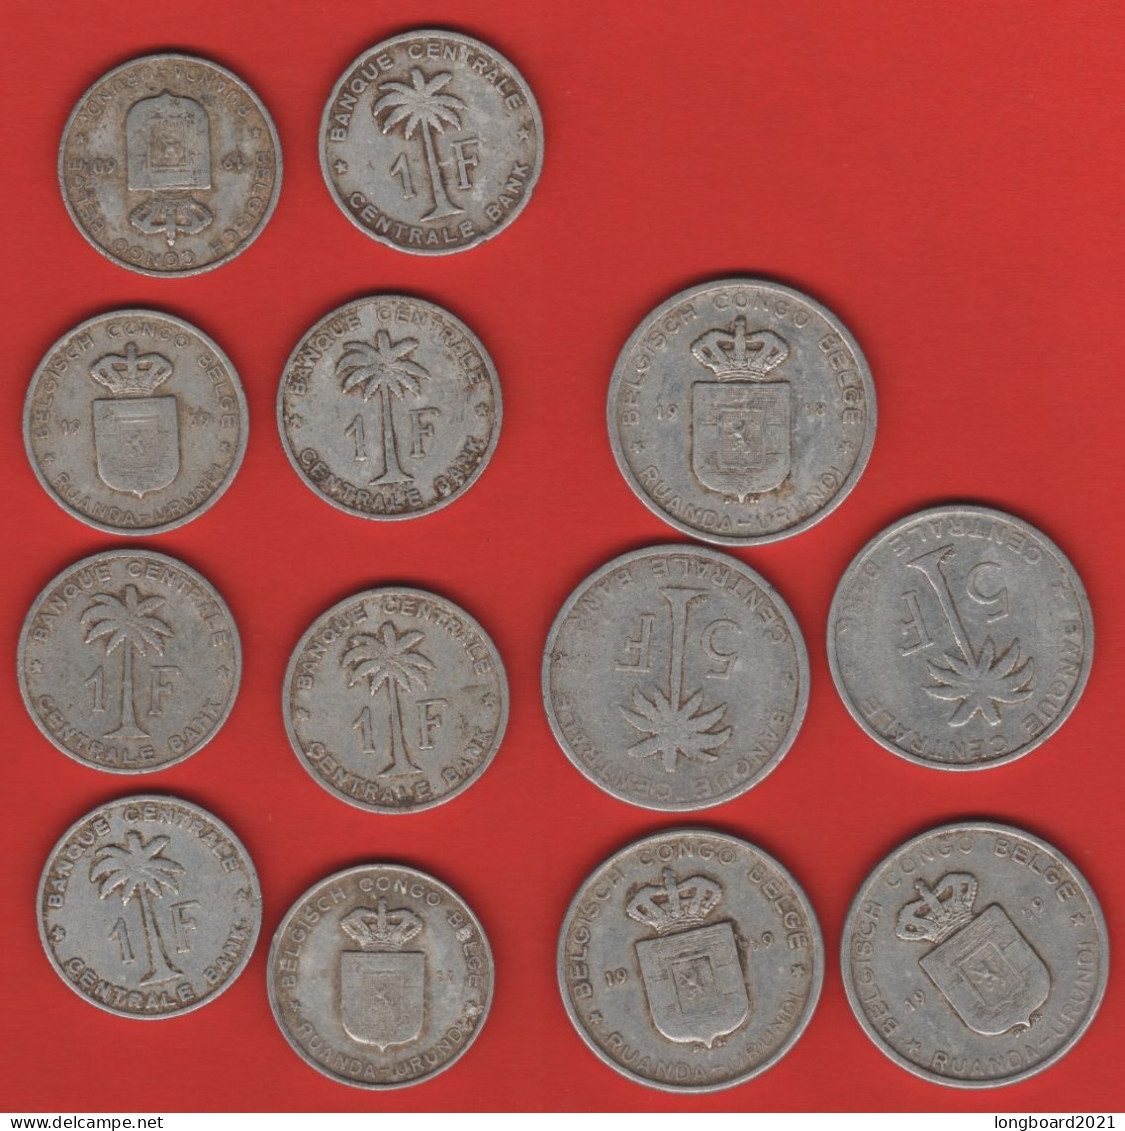 RUANDA-URUNDI - LOT 13 COINS 1,5 FRANCS 1957-1960 - 1951-1960: Boudewijn I